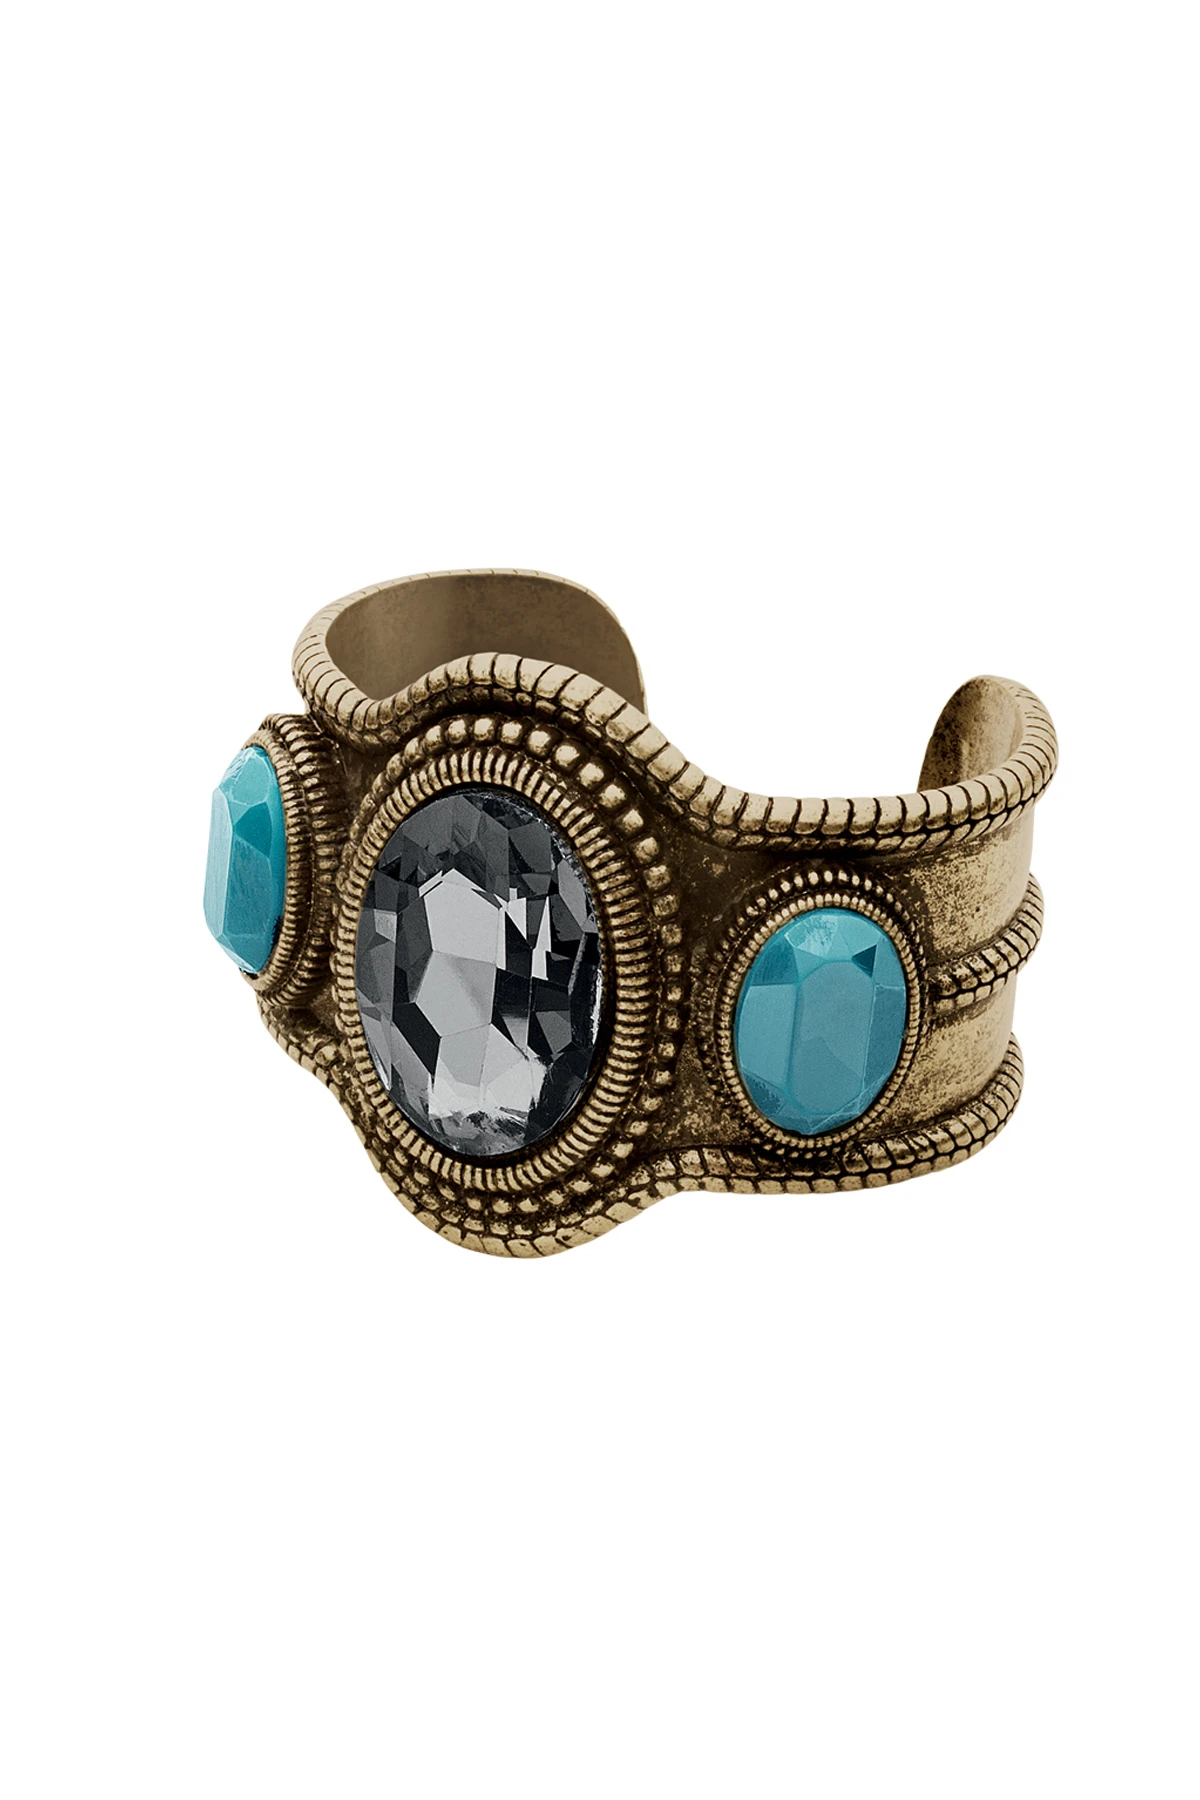 Eyecatcher Smart Bracelet Brings Customizable Patterns and Notifications on  Your Wrist | Gadgetsin